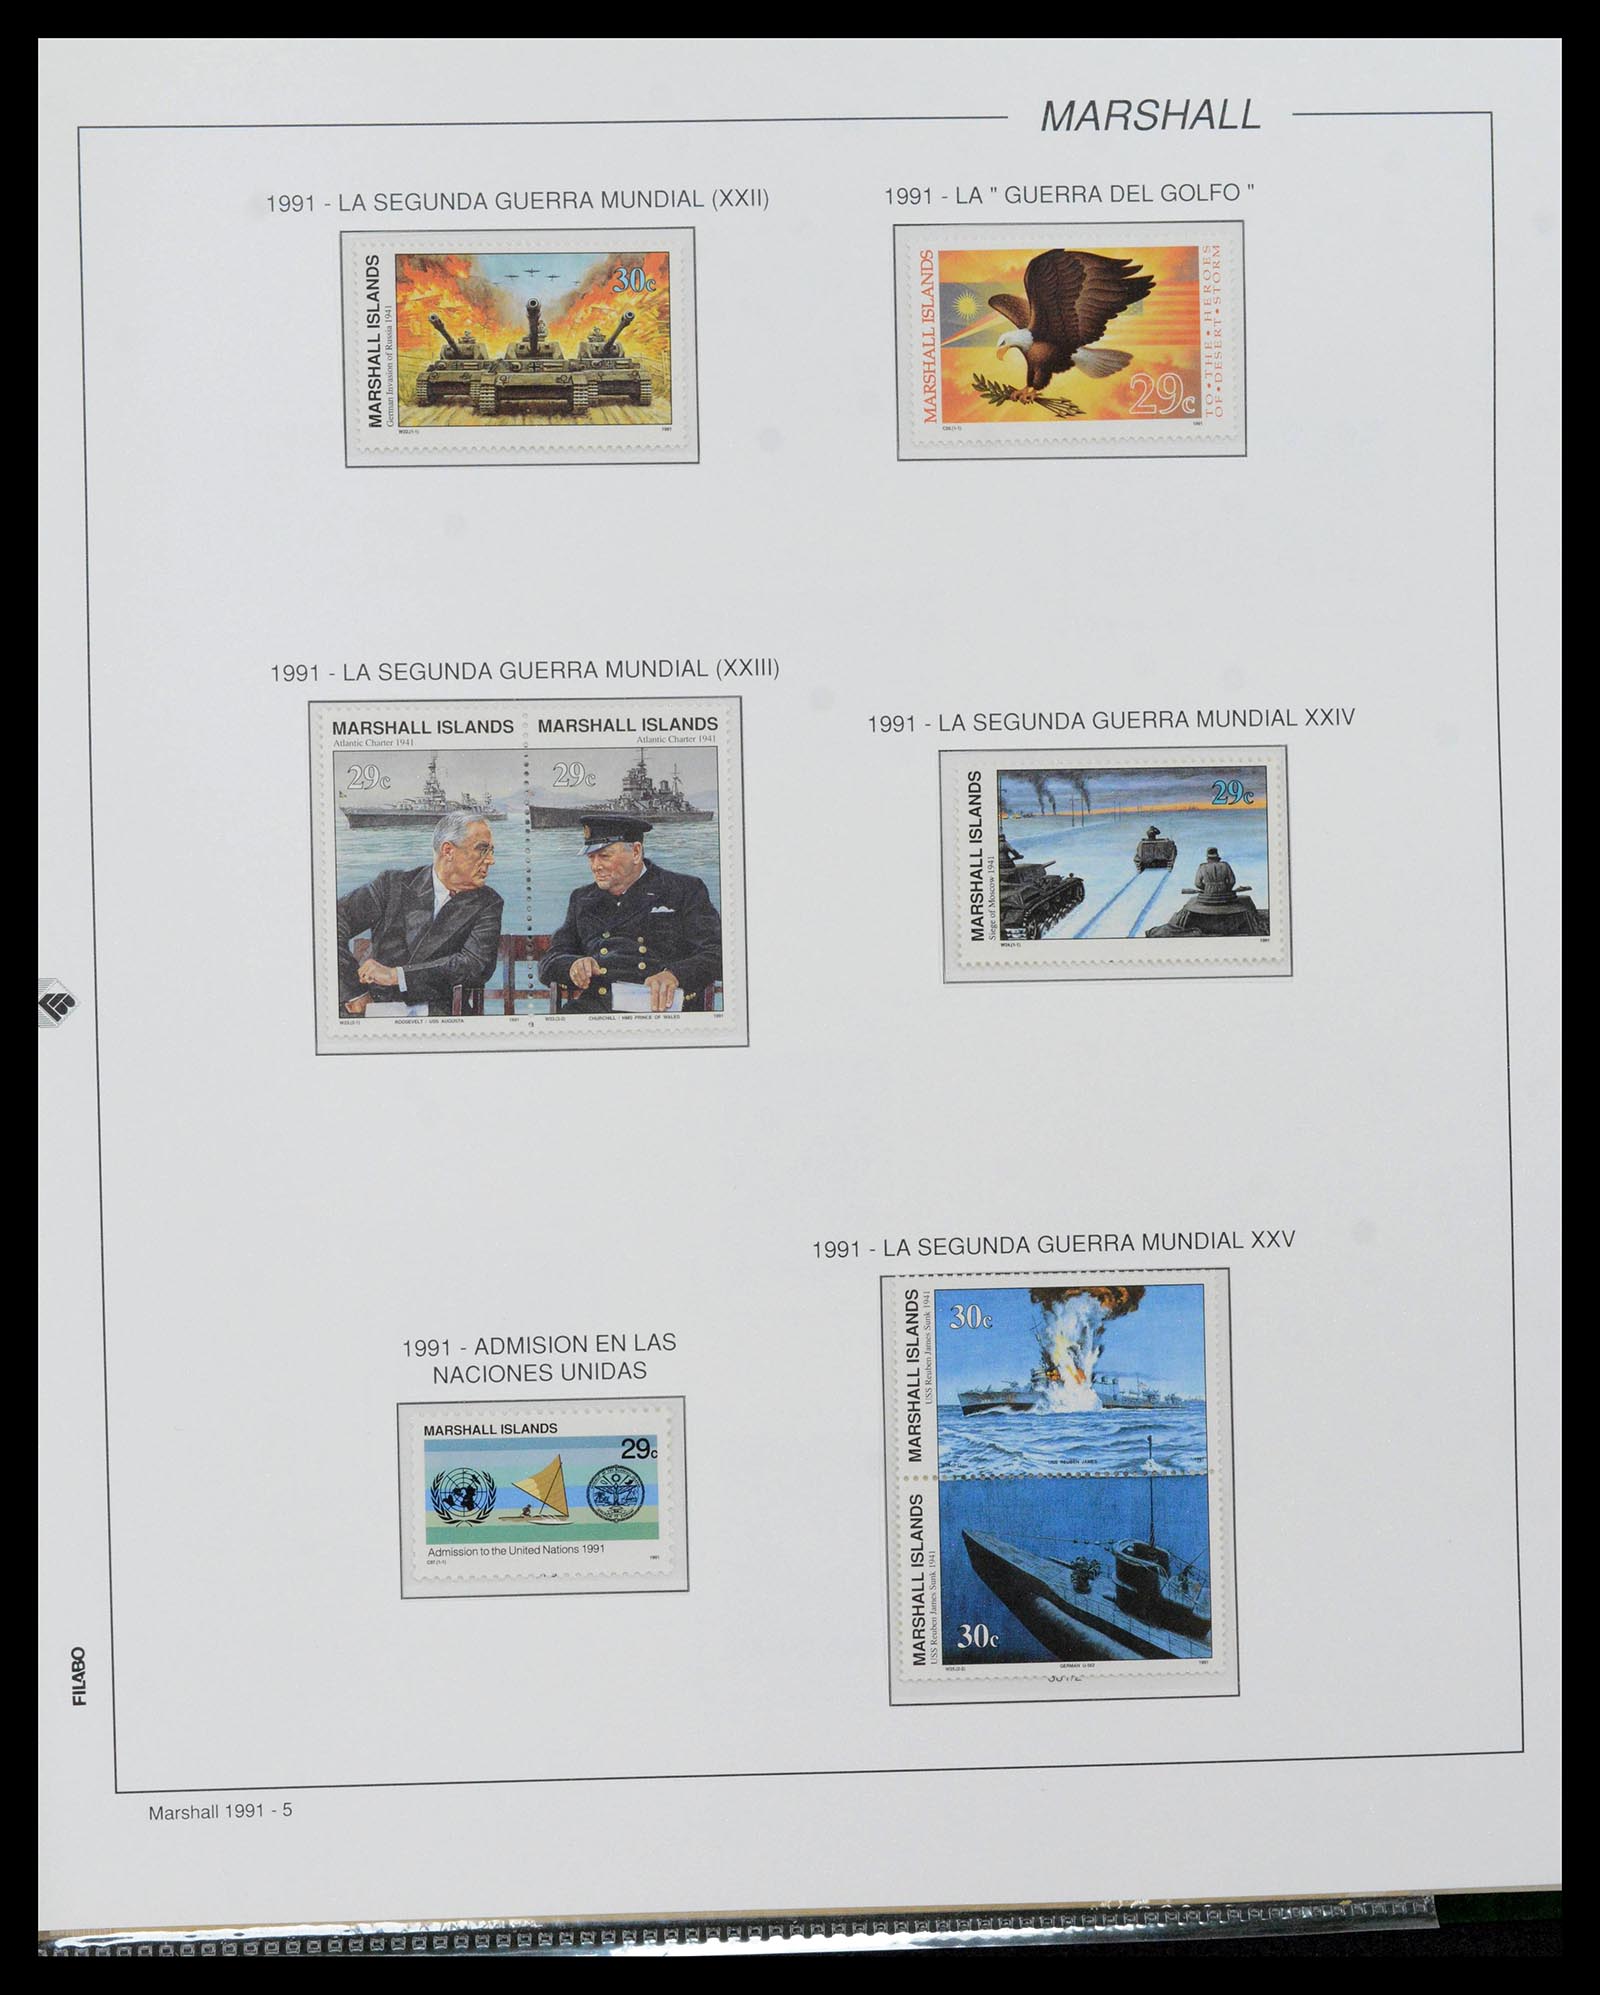 39222 0155 - Stamp collection 39222 Palau, Micronesia and Marshall islands 1980-1995.